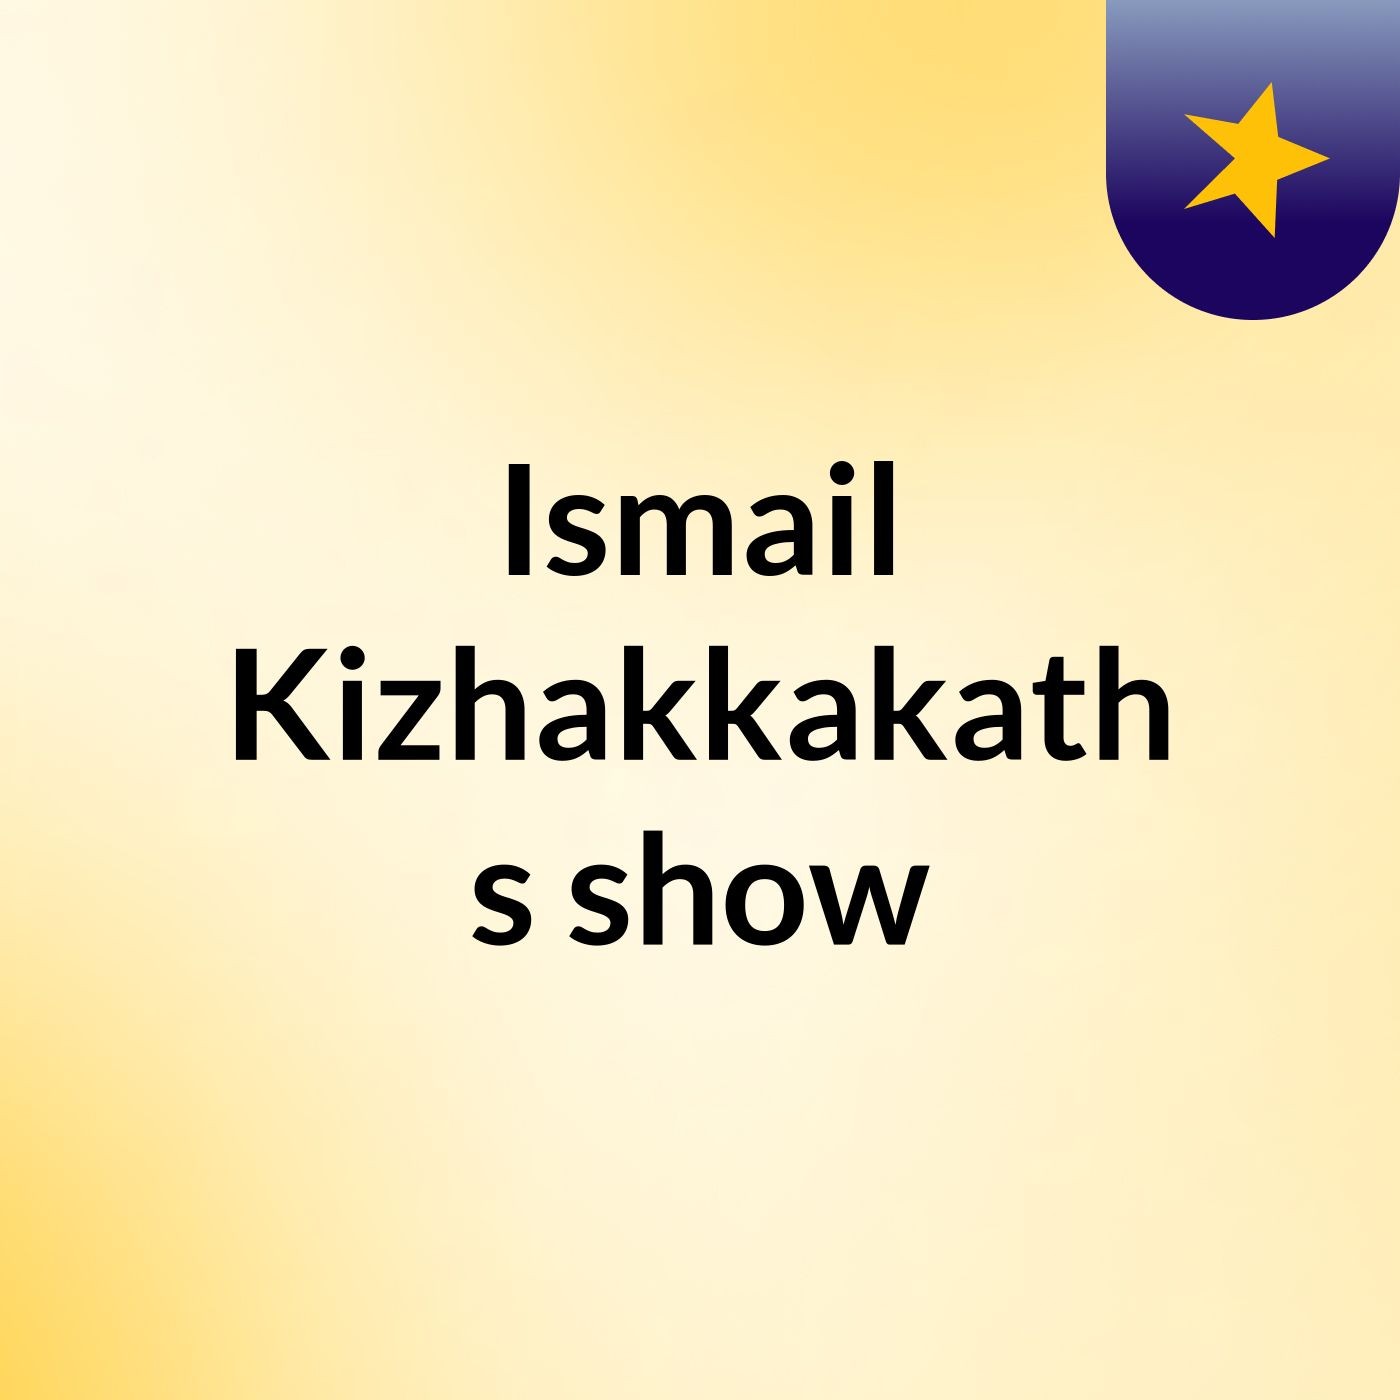 Ismail Kizhakkakath's show